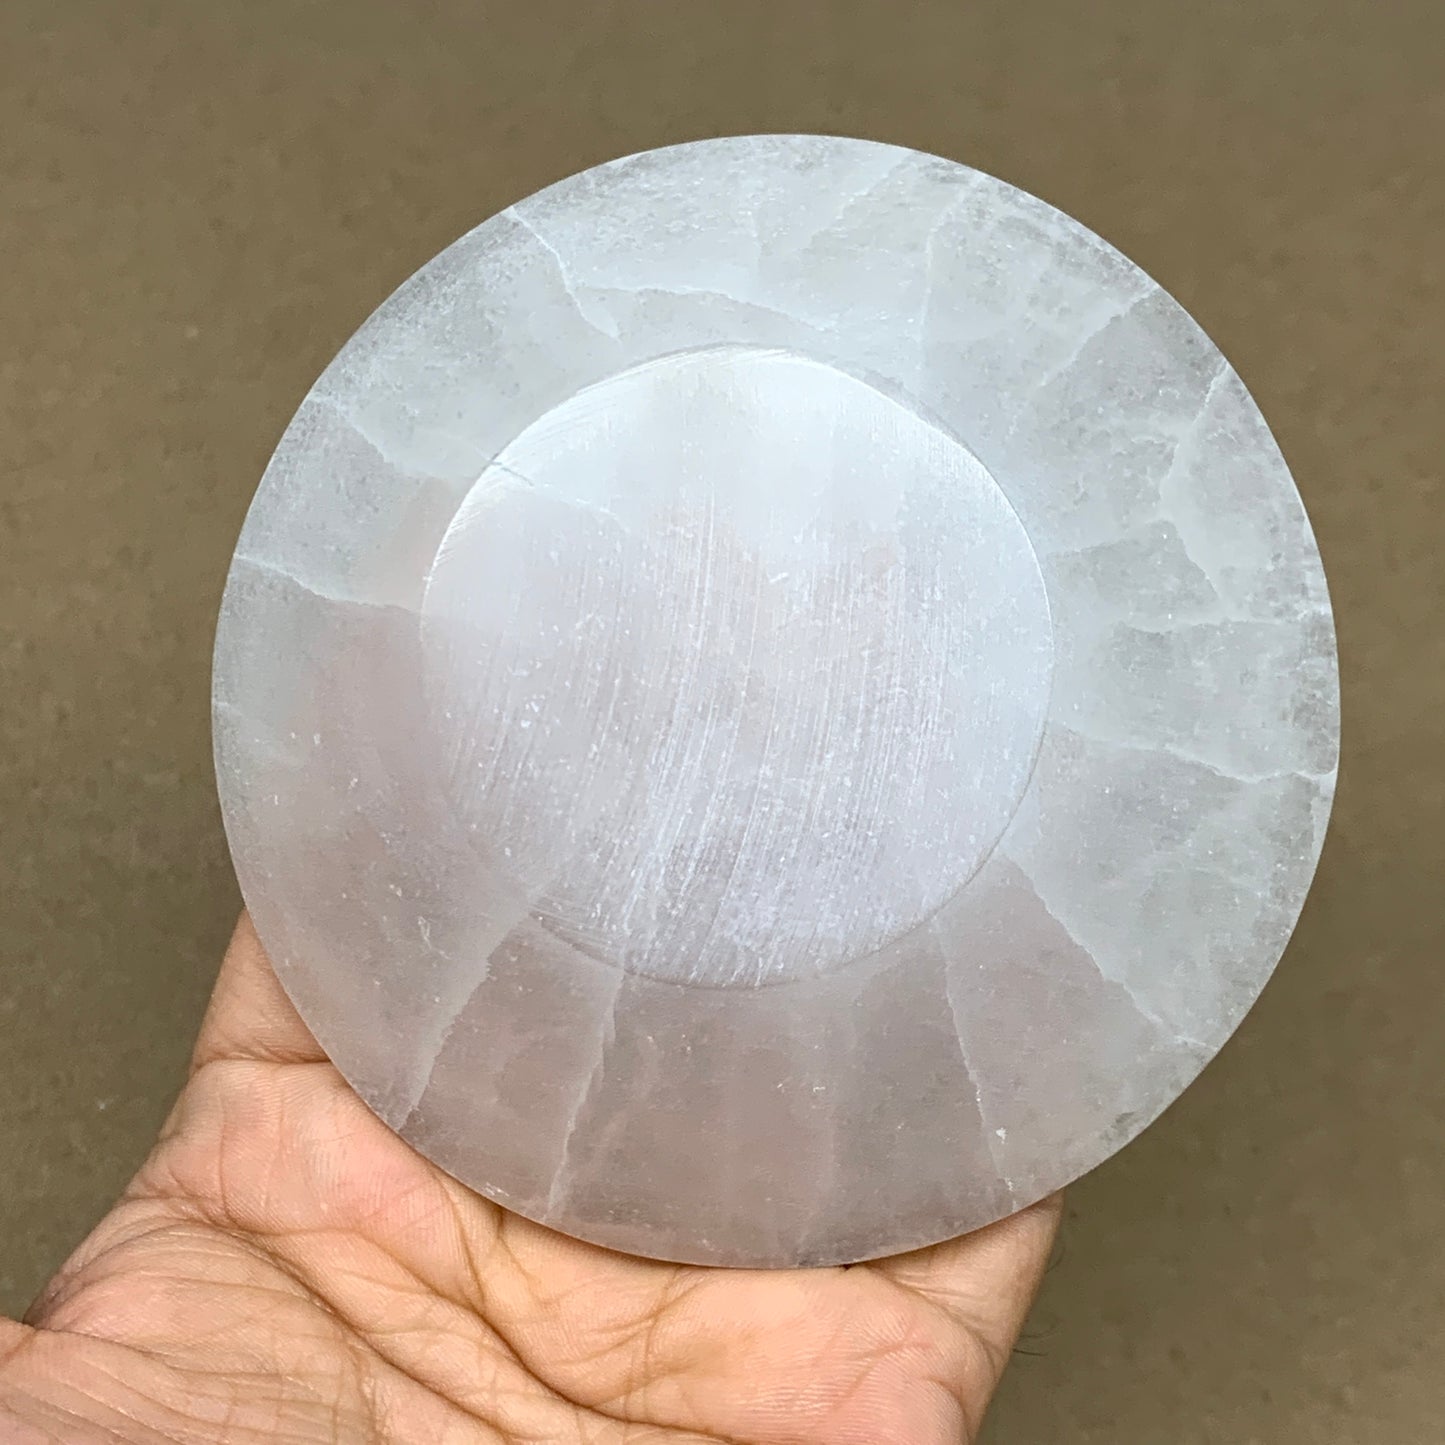 4pcs, 1090g, 3.9"-4" Natural Round Selenite Bowls Crystals from Morocco, B9196